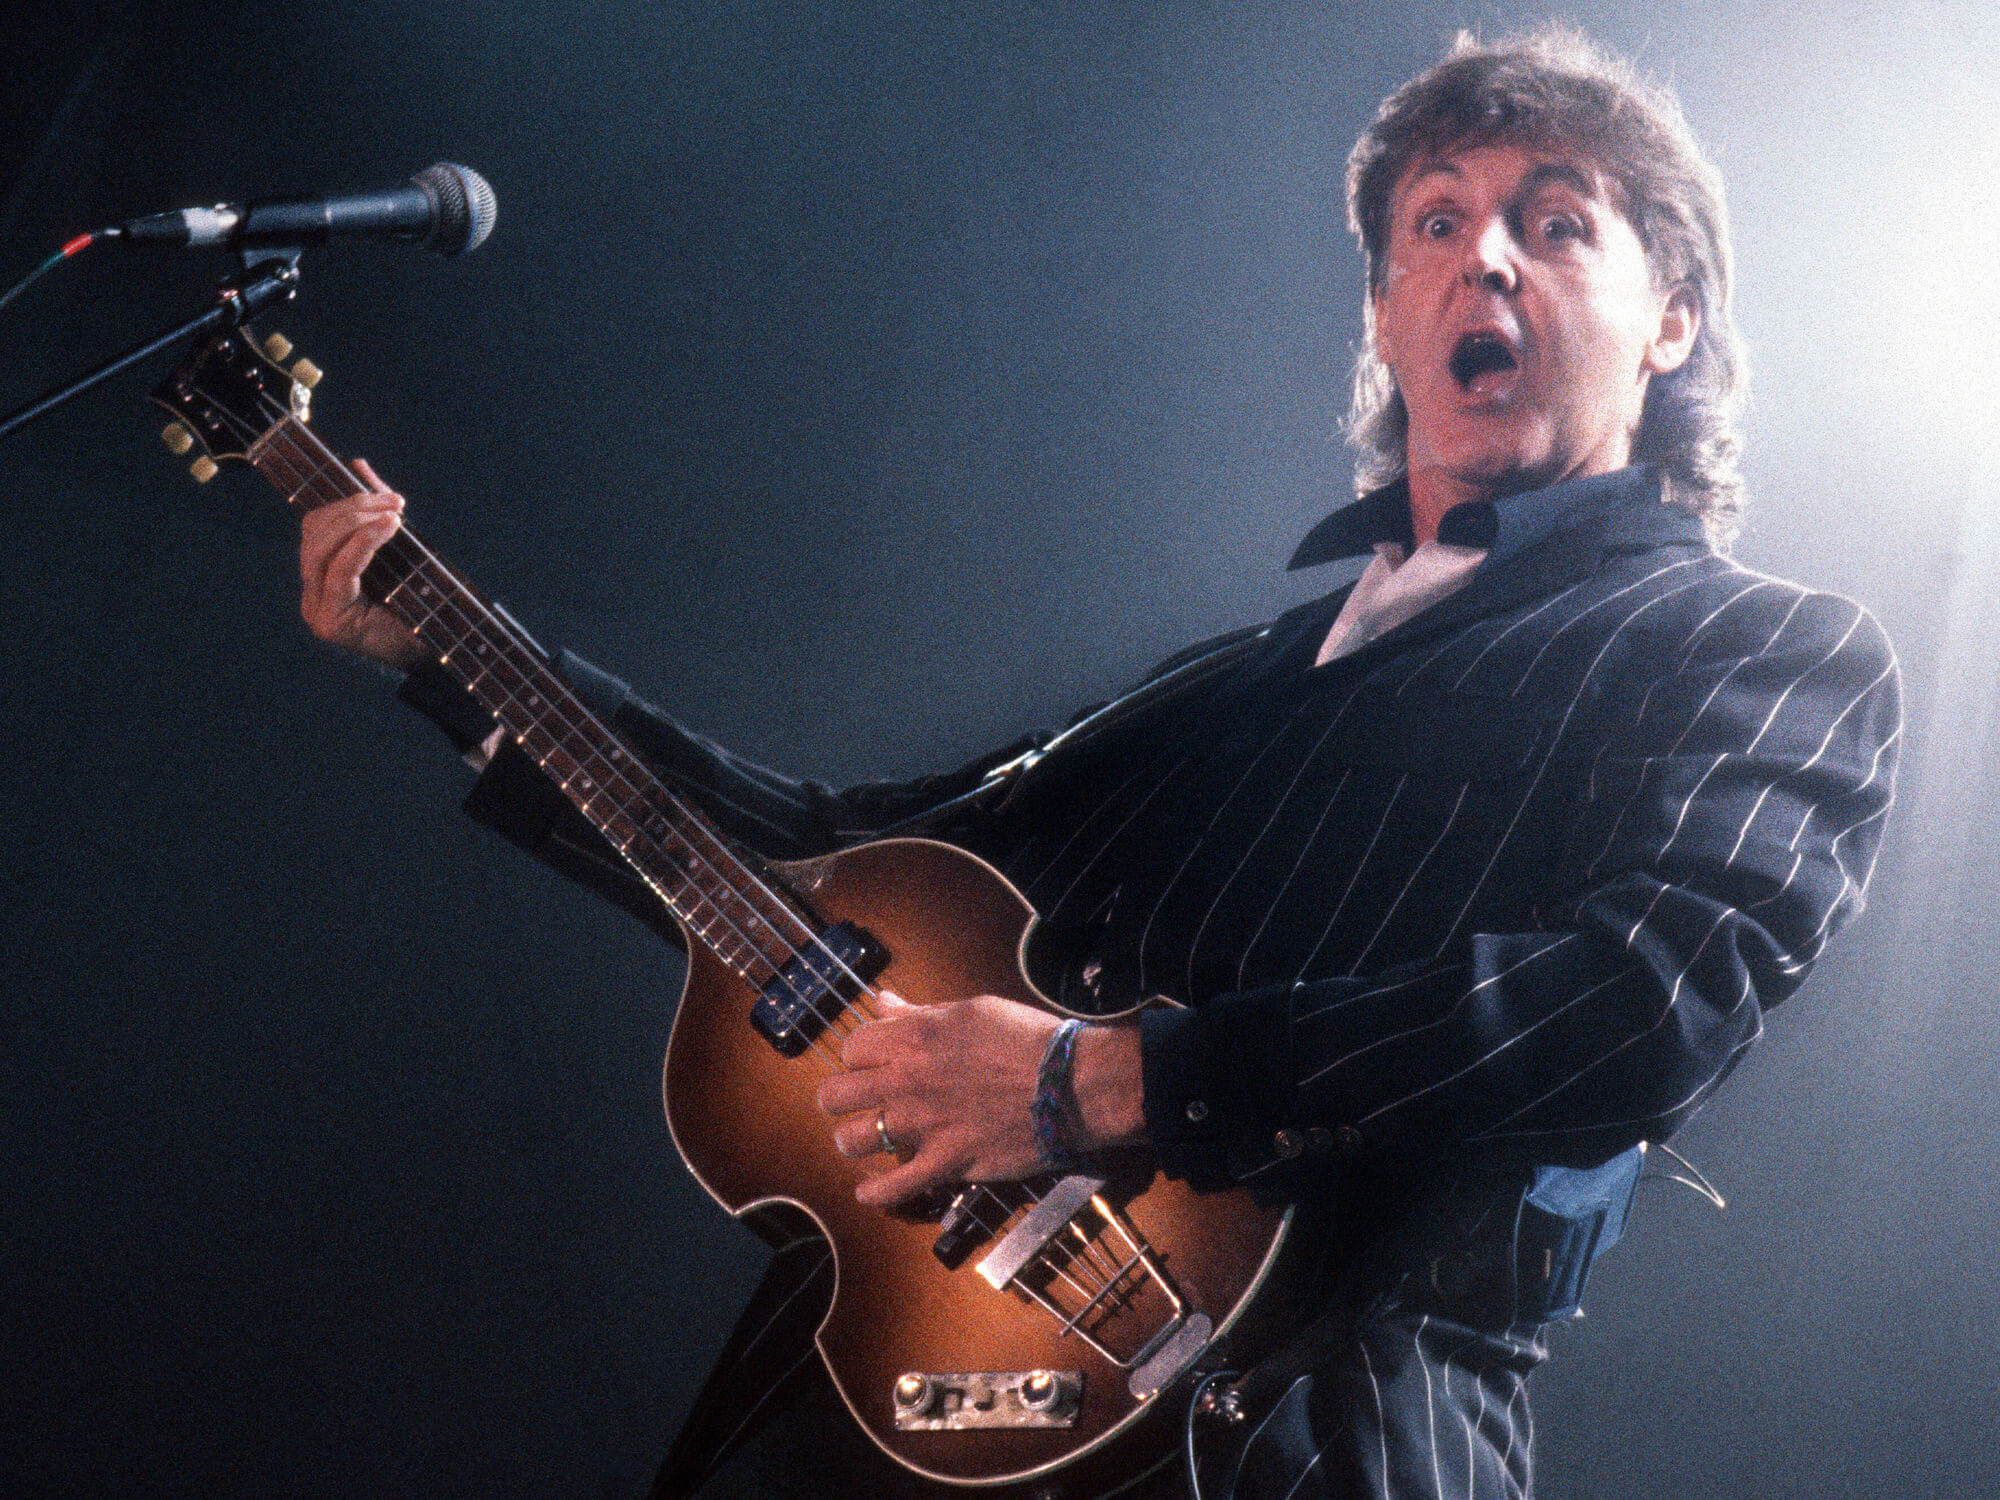 Paul McCartney performs on stage, playing Hofner 500/1 violin bass guitar